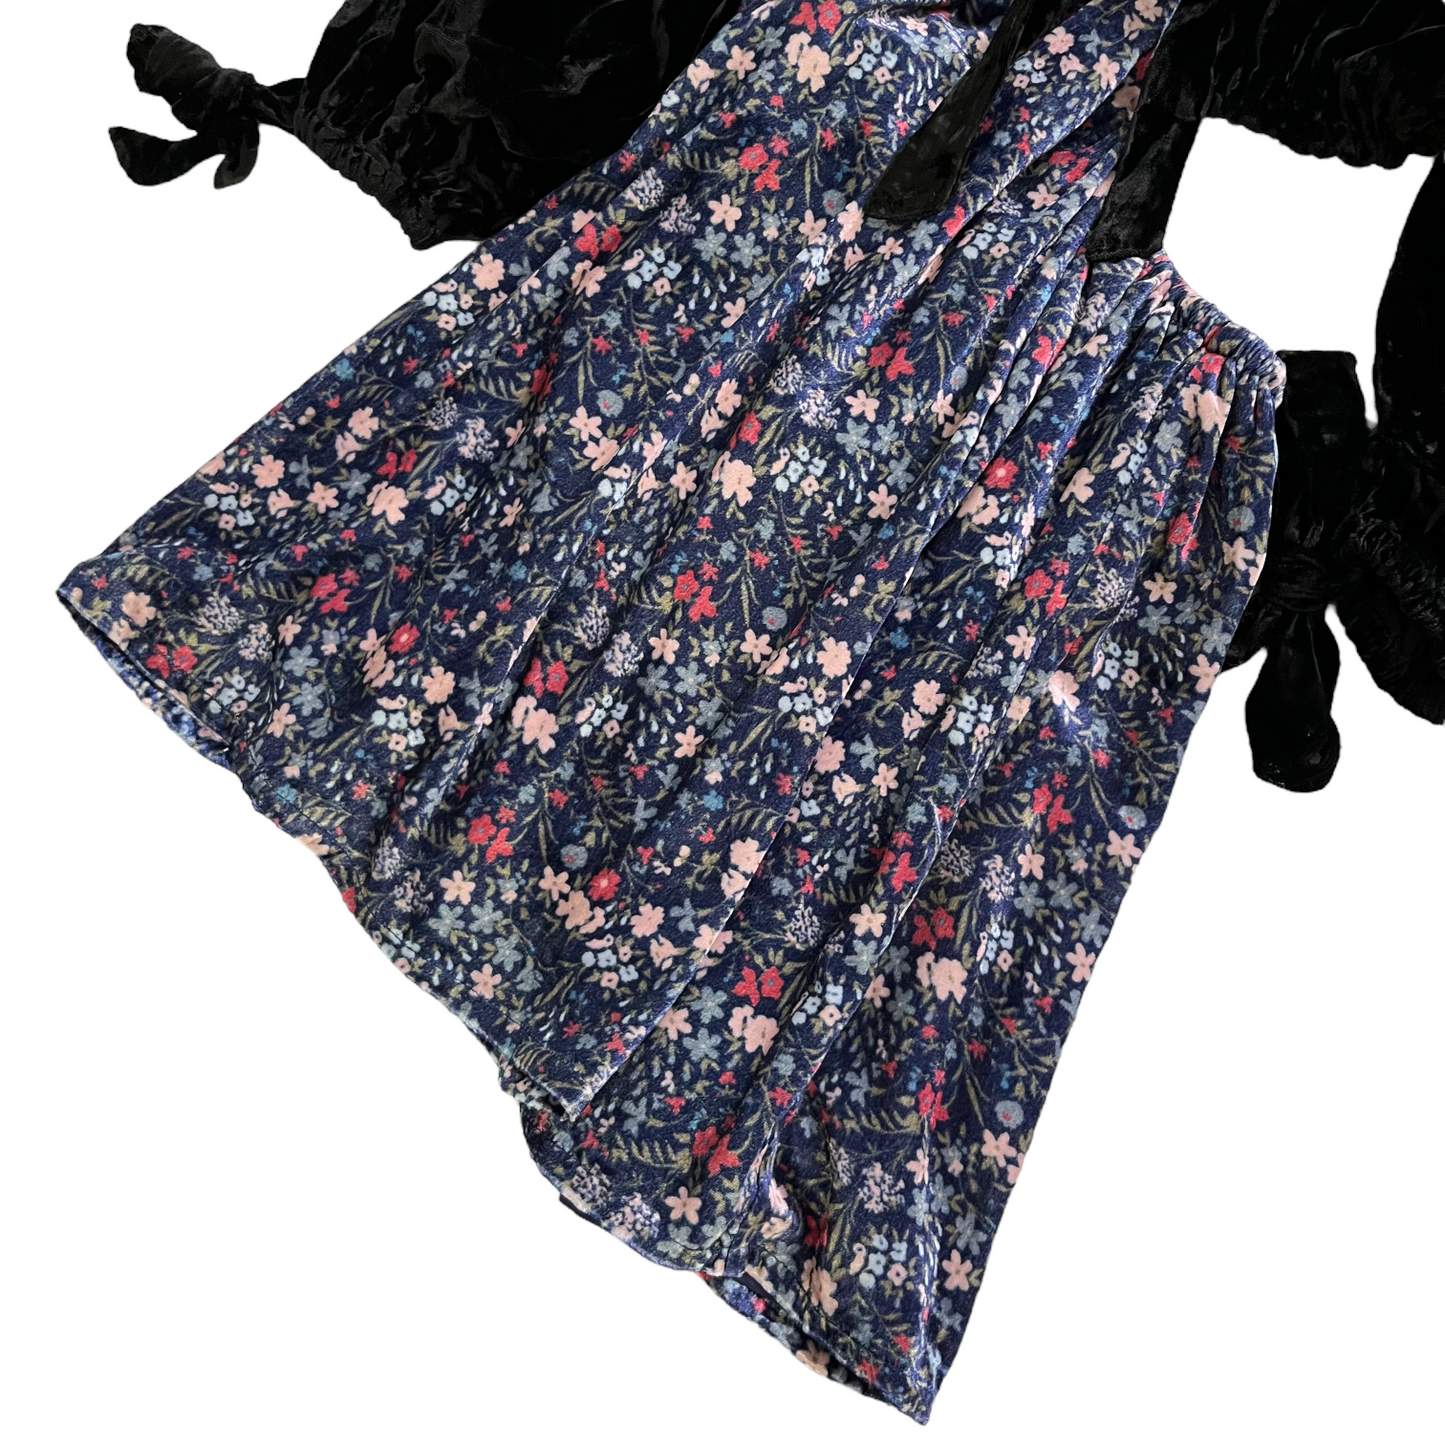 Tularosa Carmella Mini Dress in Carmella Floral